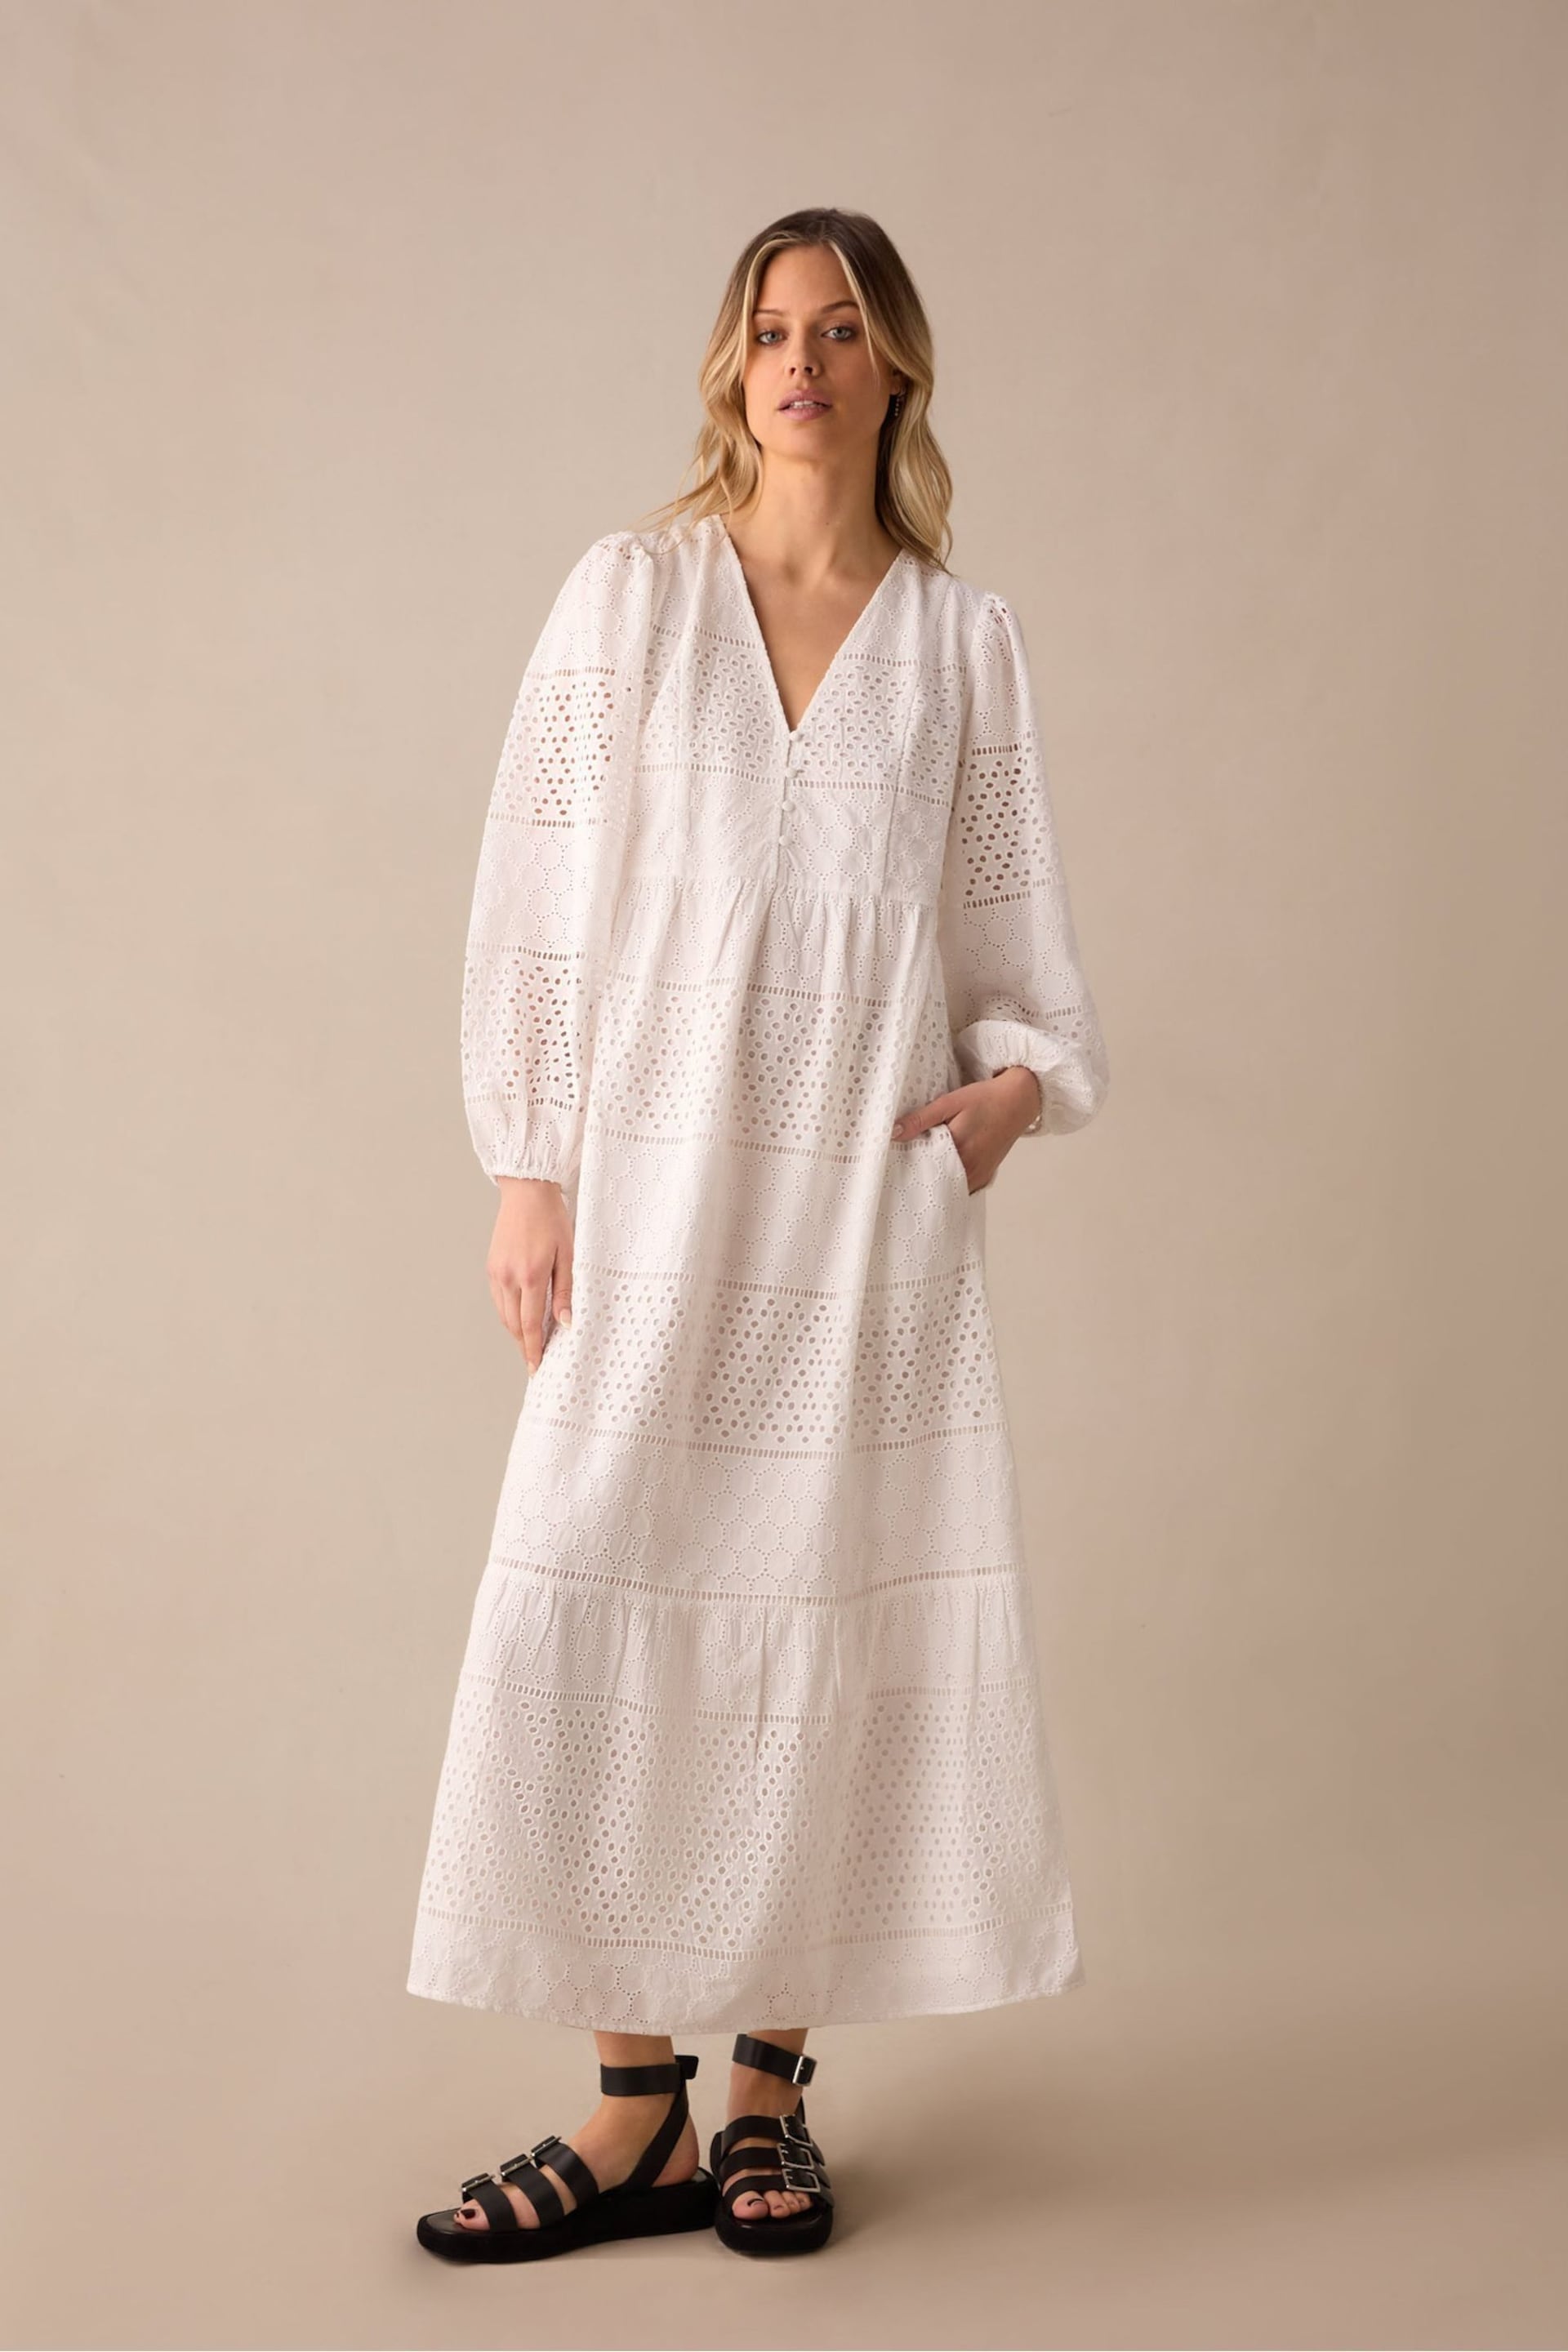 Ro&Zo Mixed Broderie White Midi Dress - Image 1 of 7